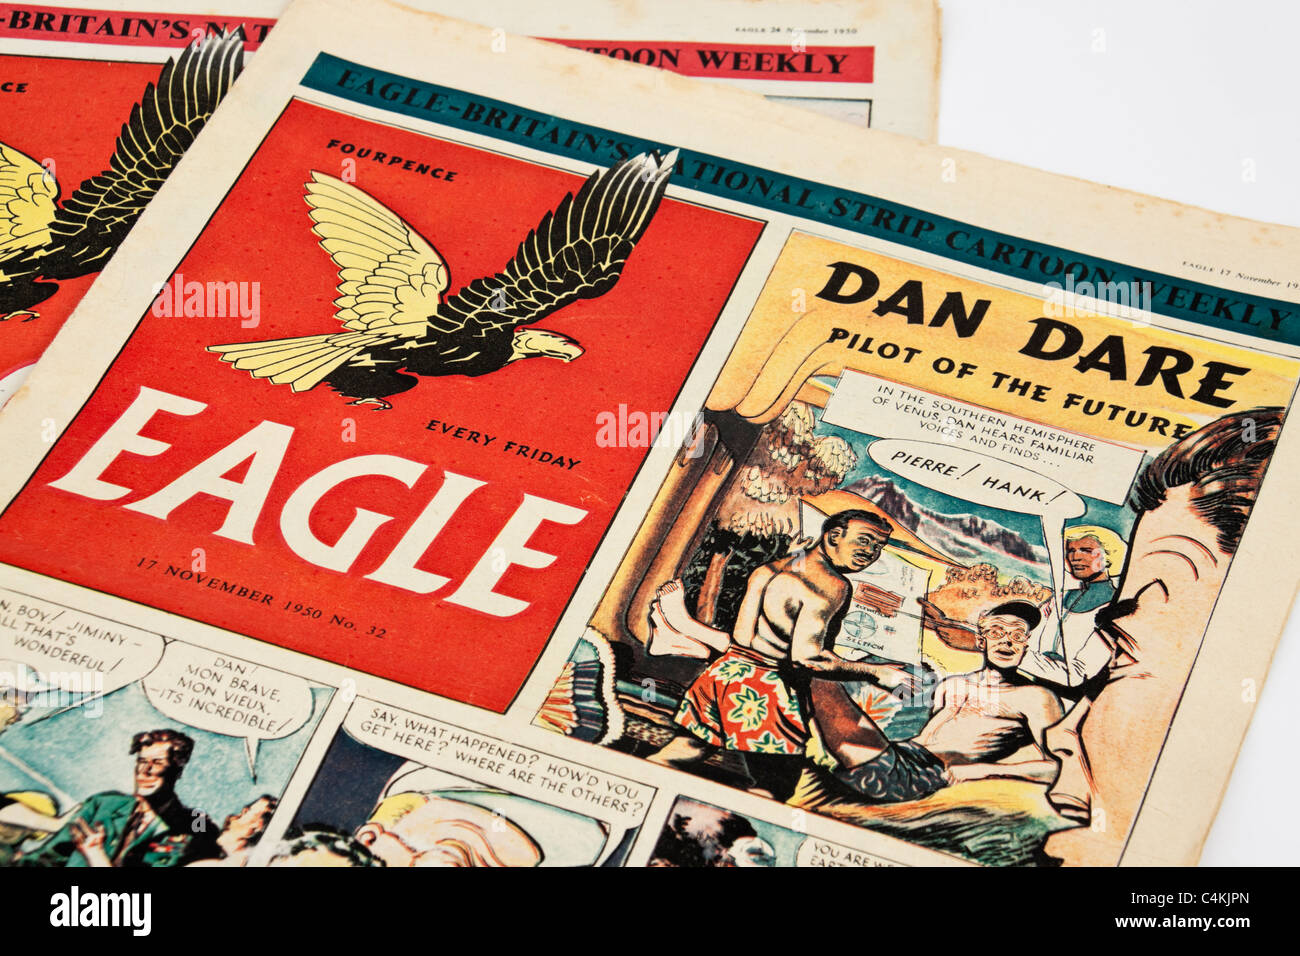 Original Vintage British "Eagle" Comic, mit Dan Dare (Ausgabe Nr. 32 vom 17. November 1950) Stockfoto